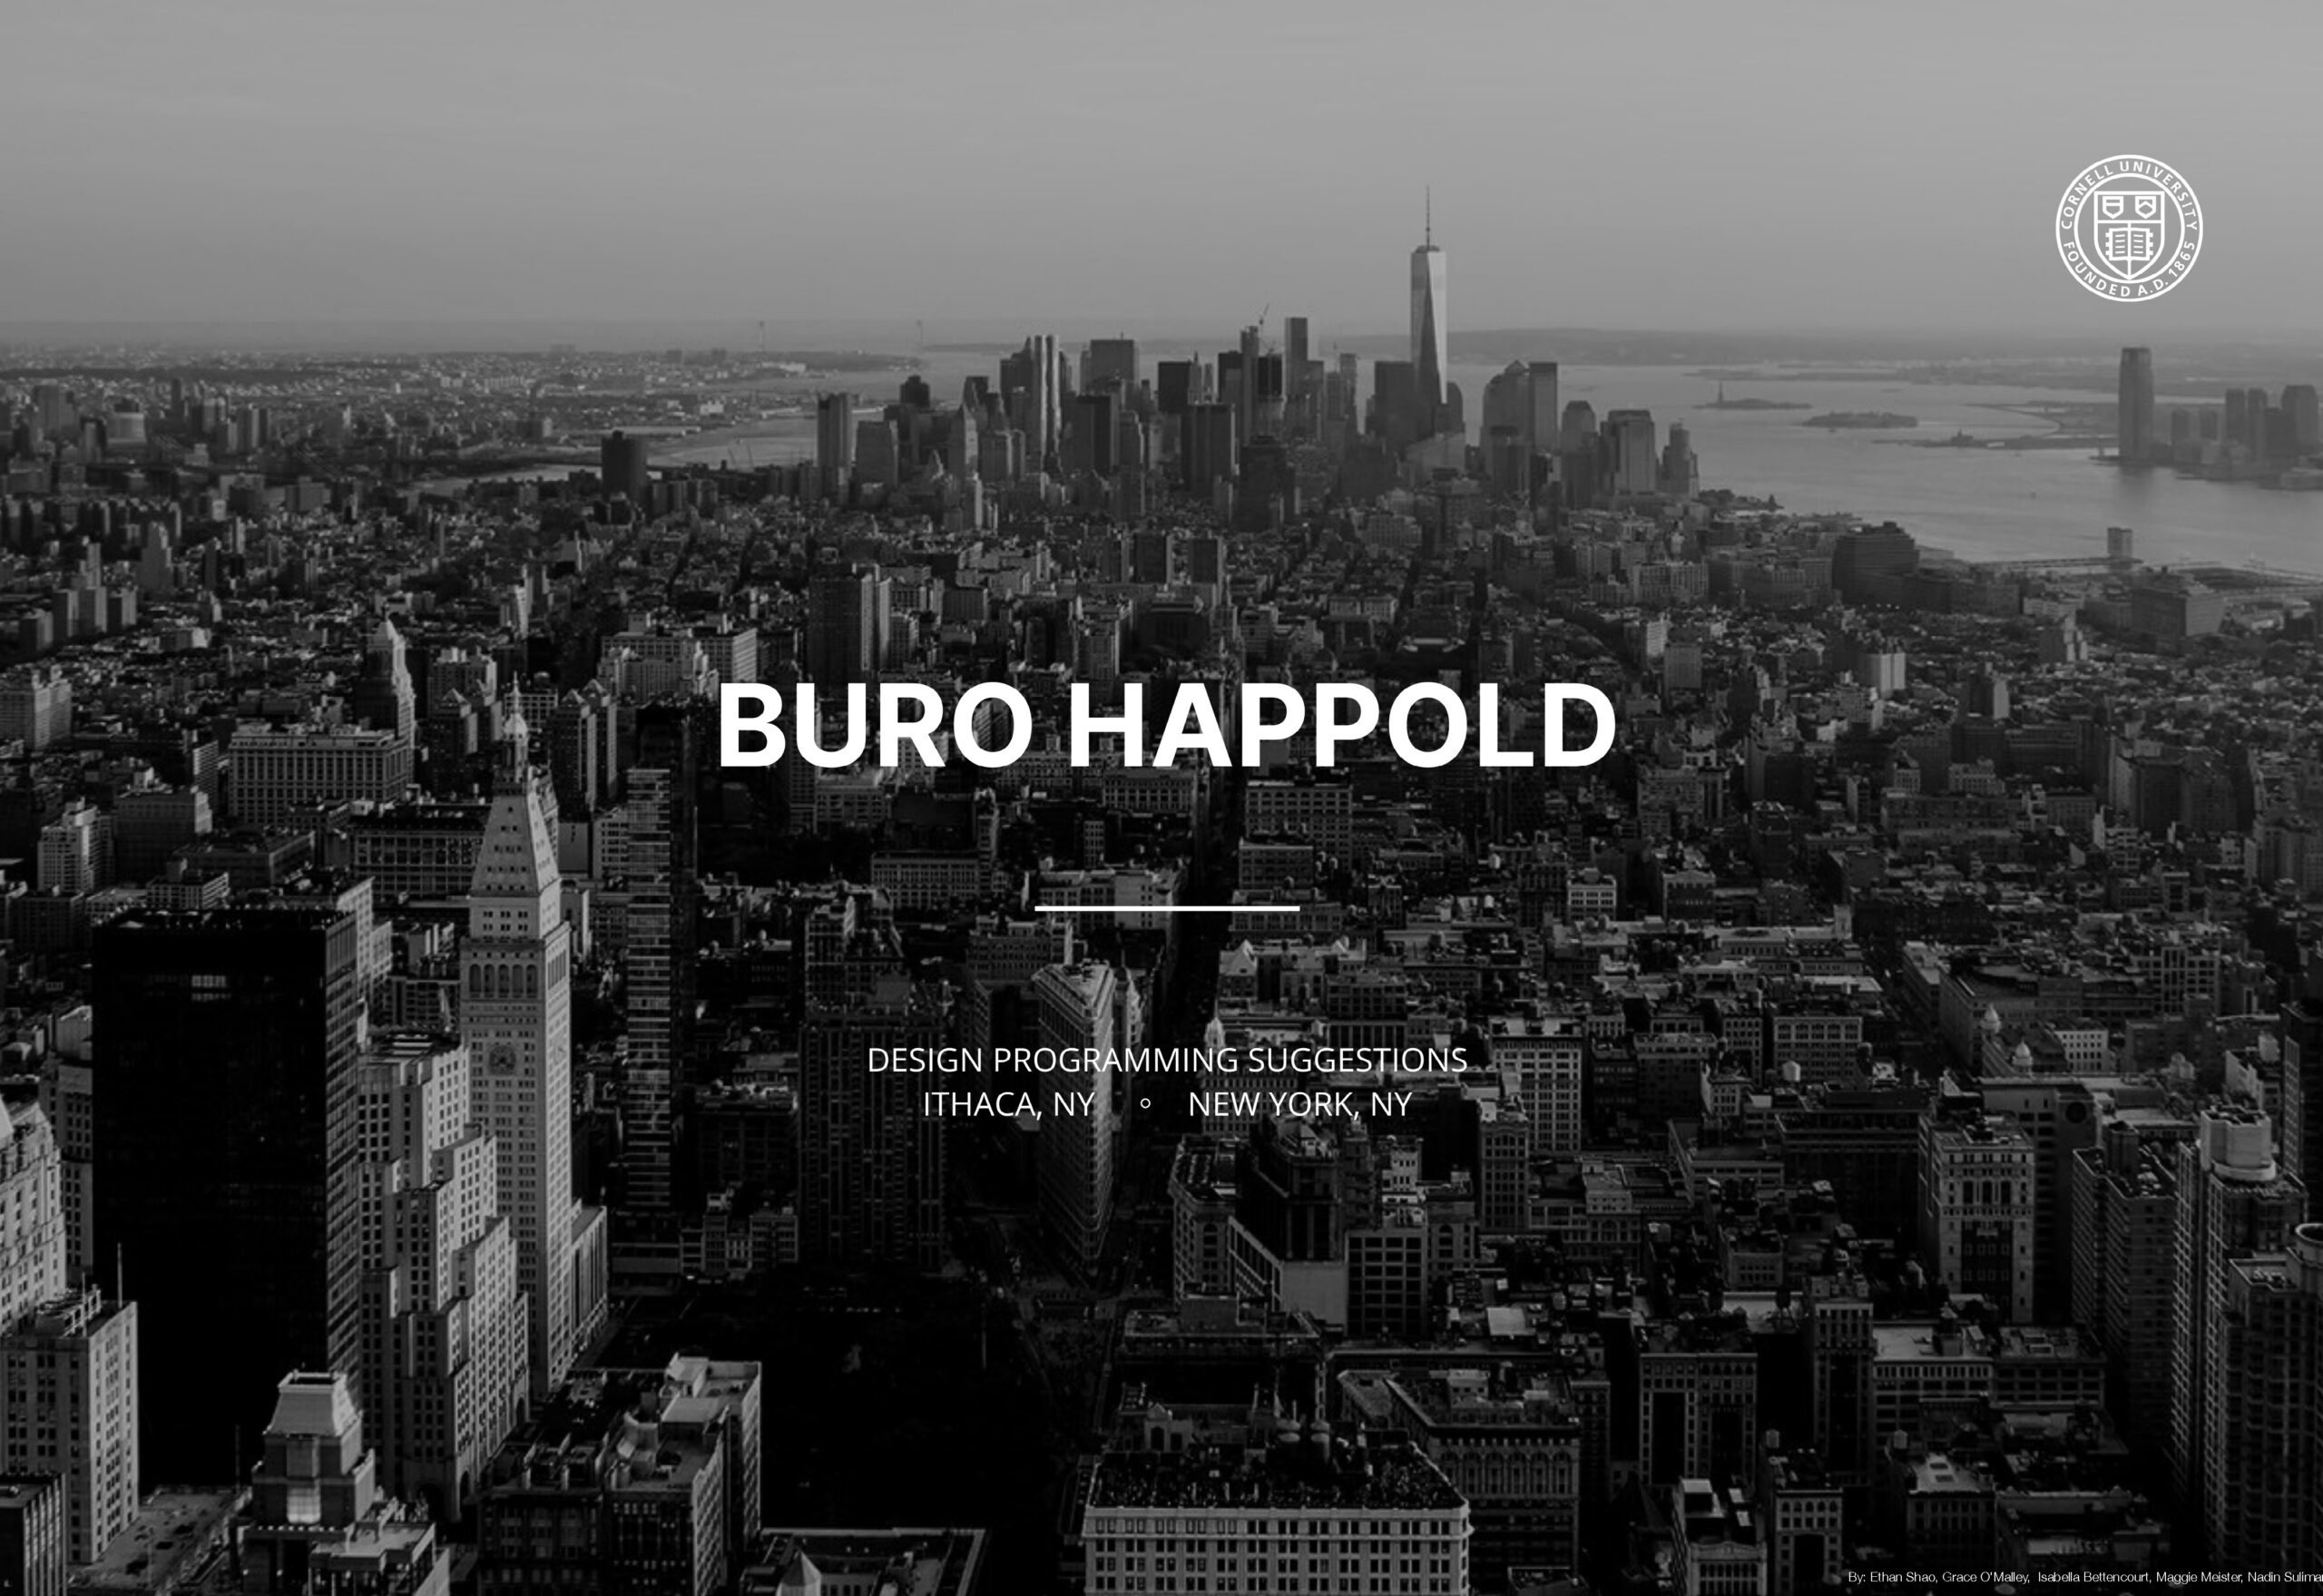 Buro Happold